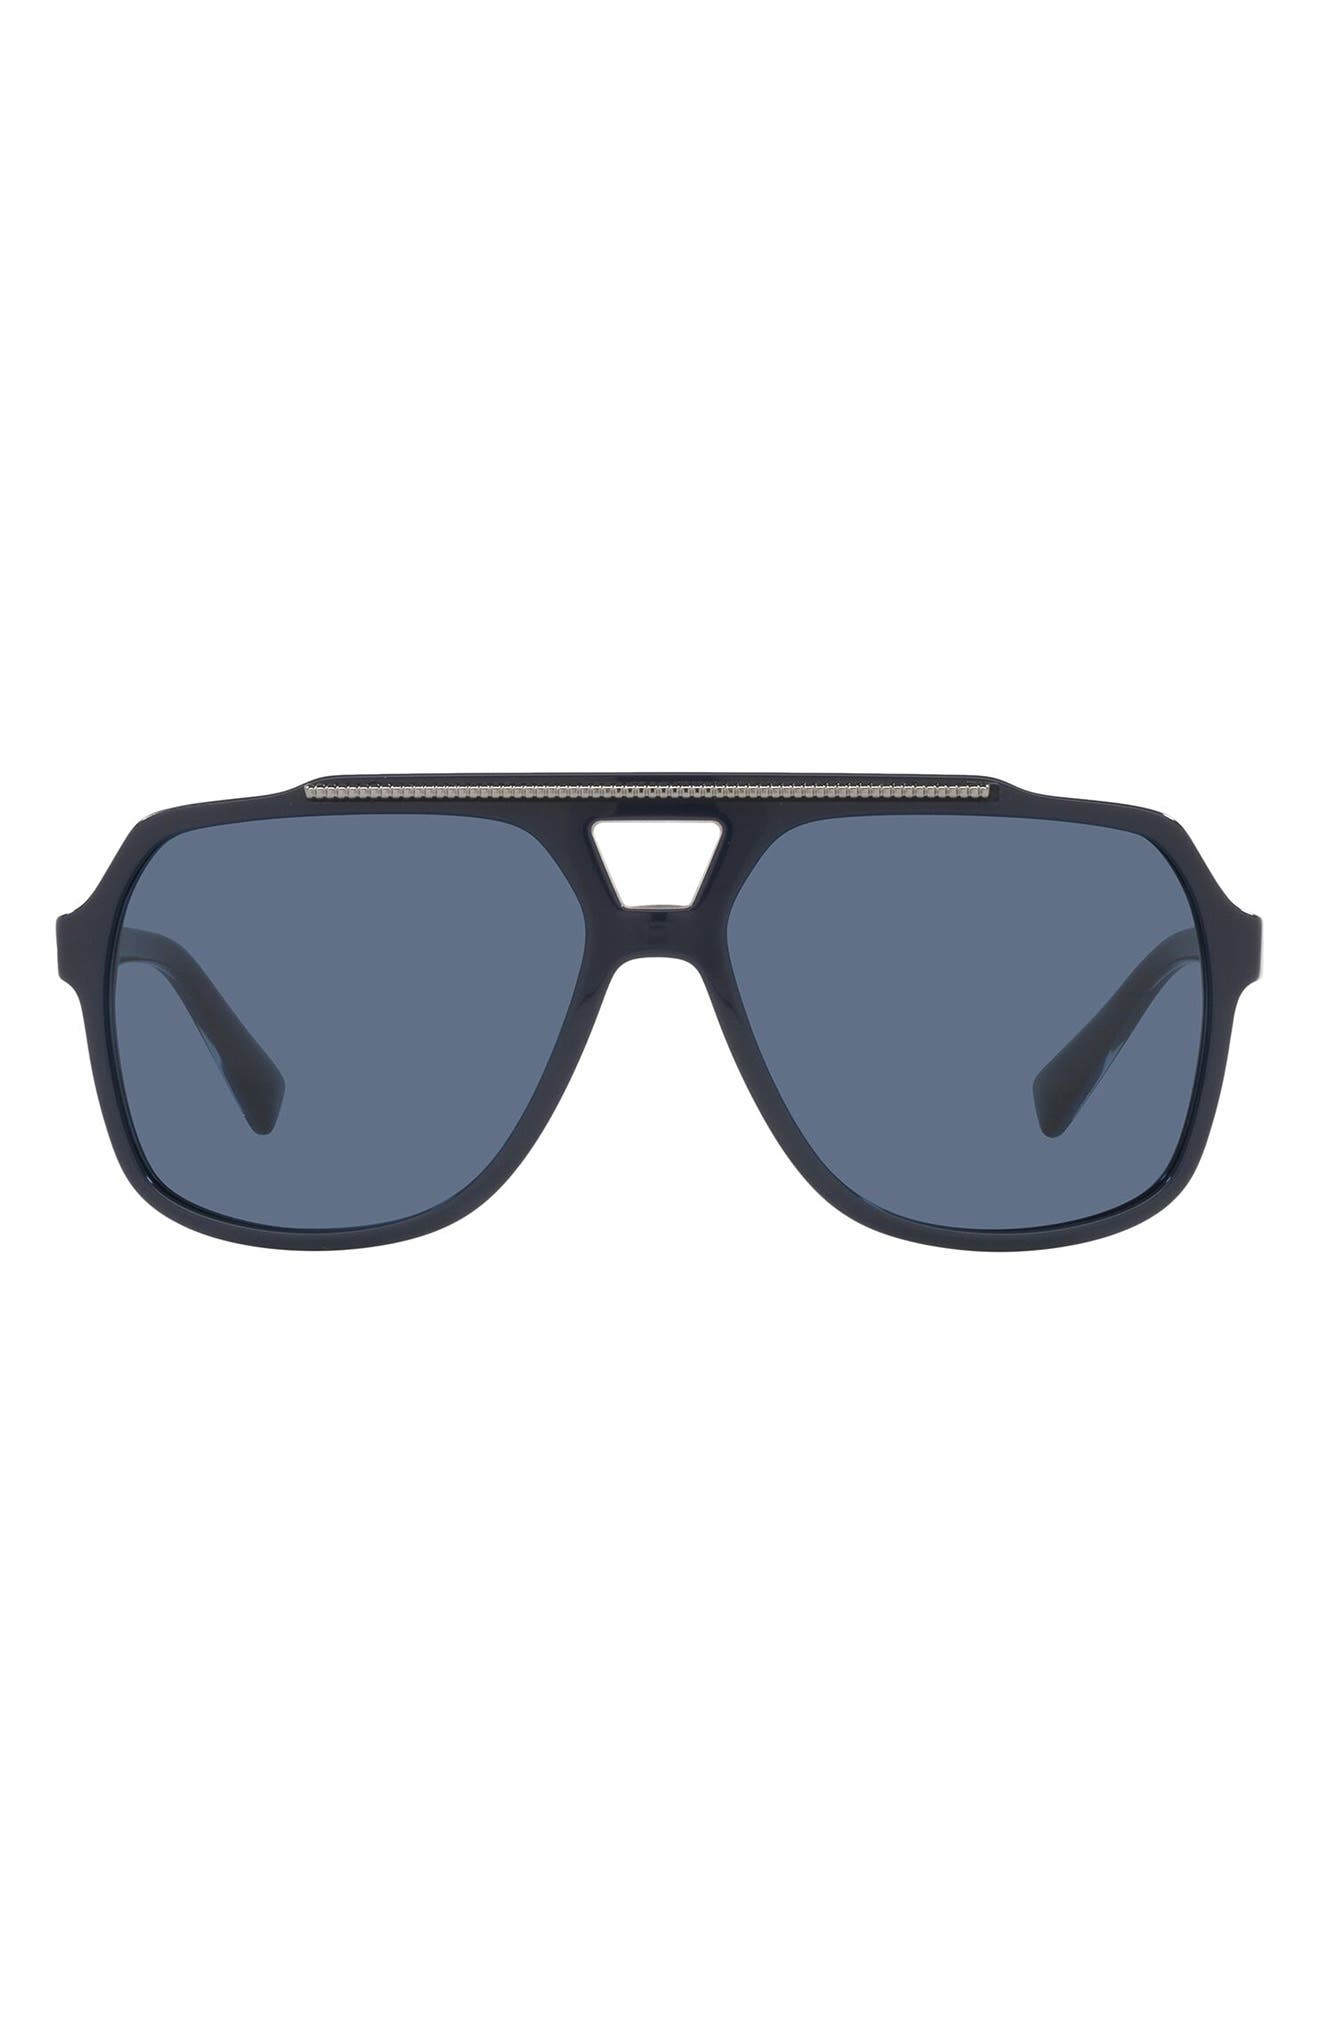 Dolce & Gabbana 60mm Aviator Sunglasses in Blue/Dark Blue at Nordstrom